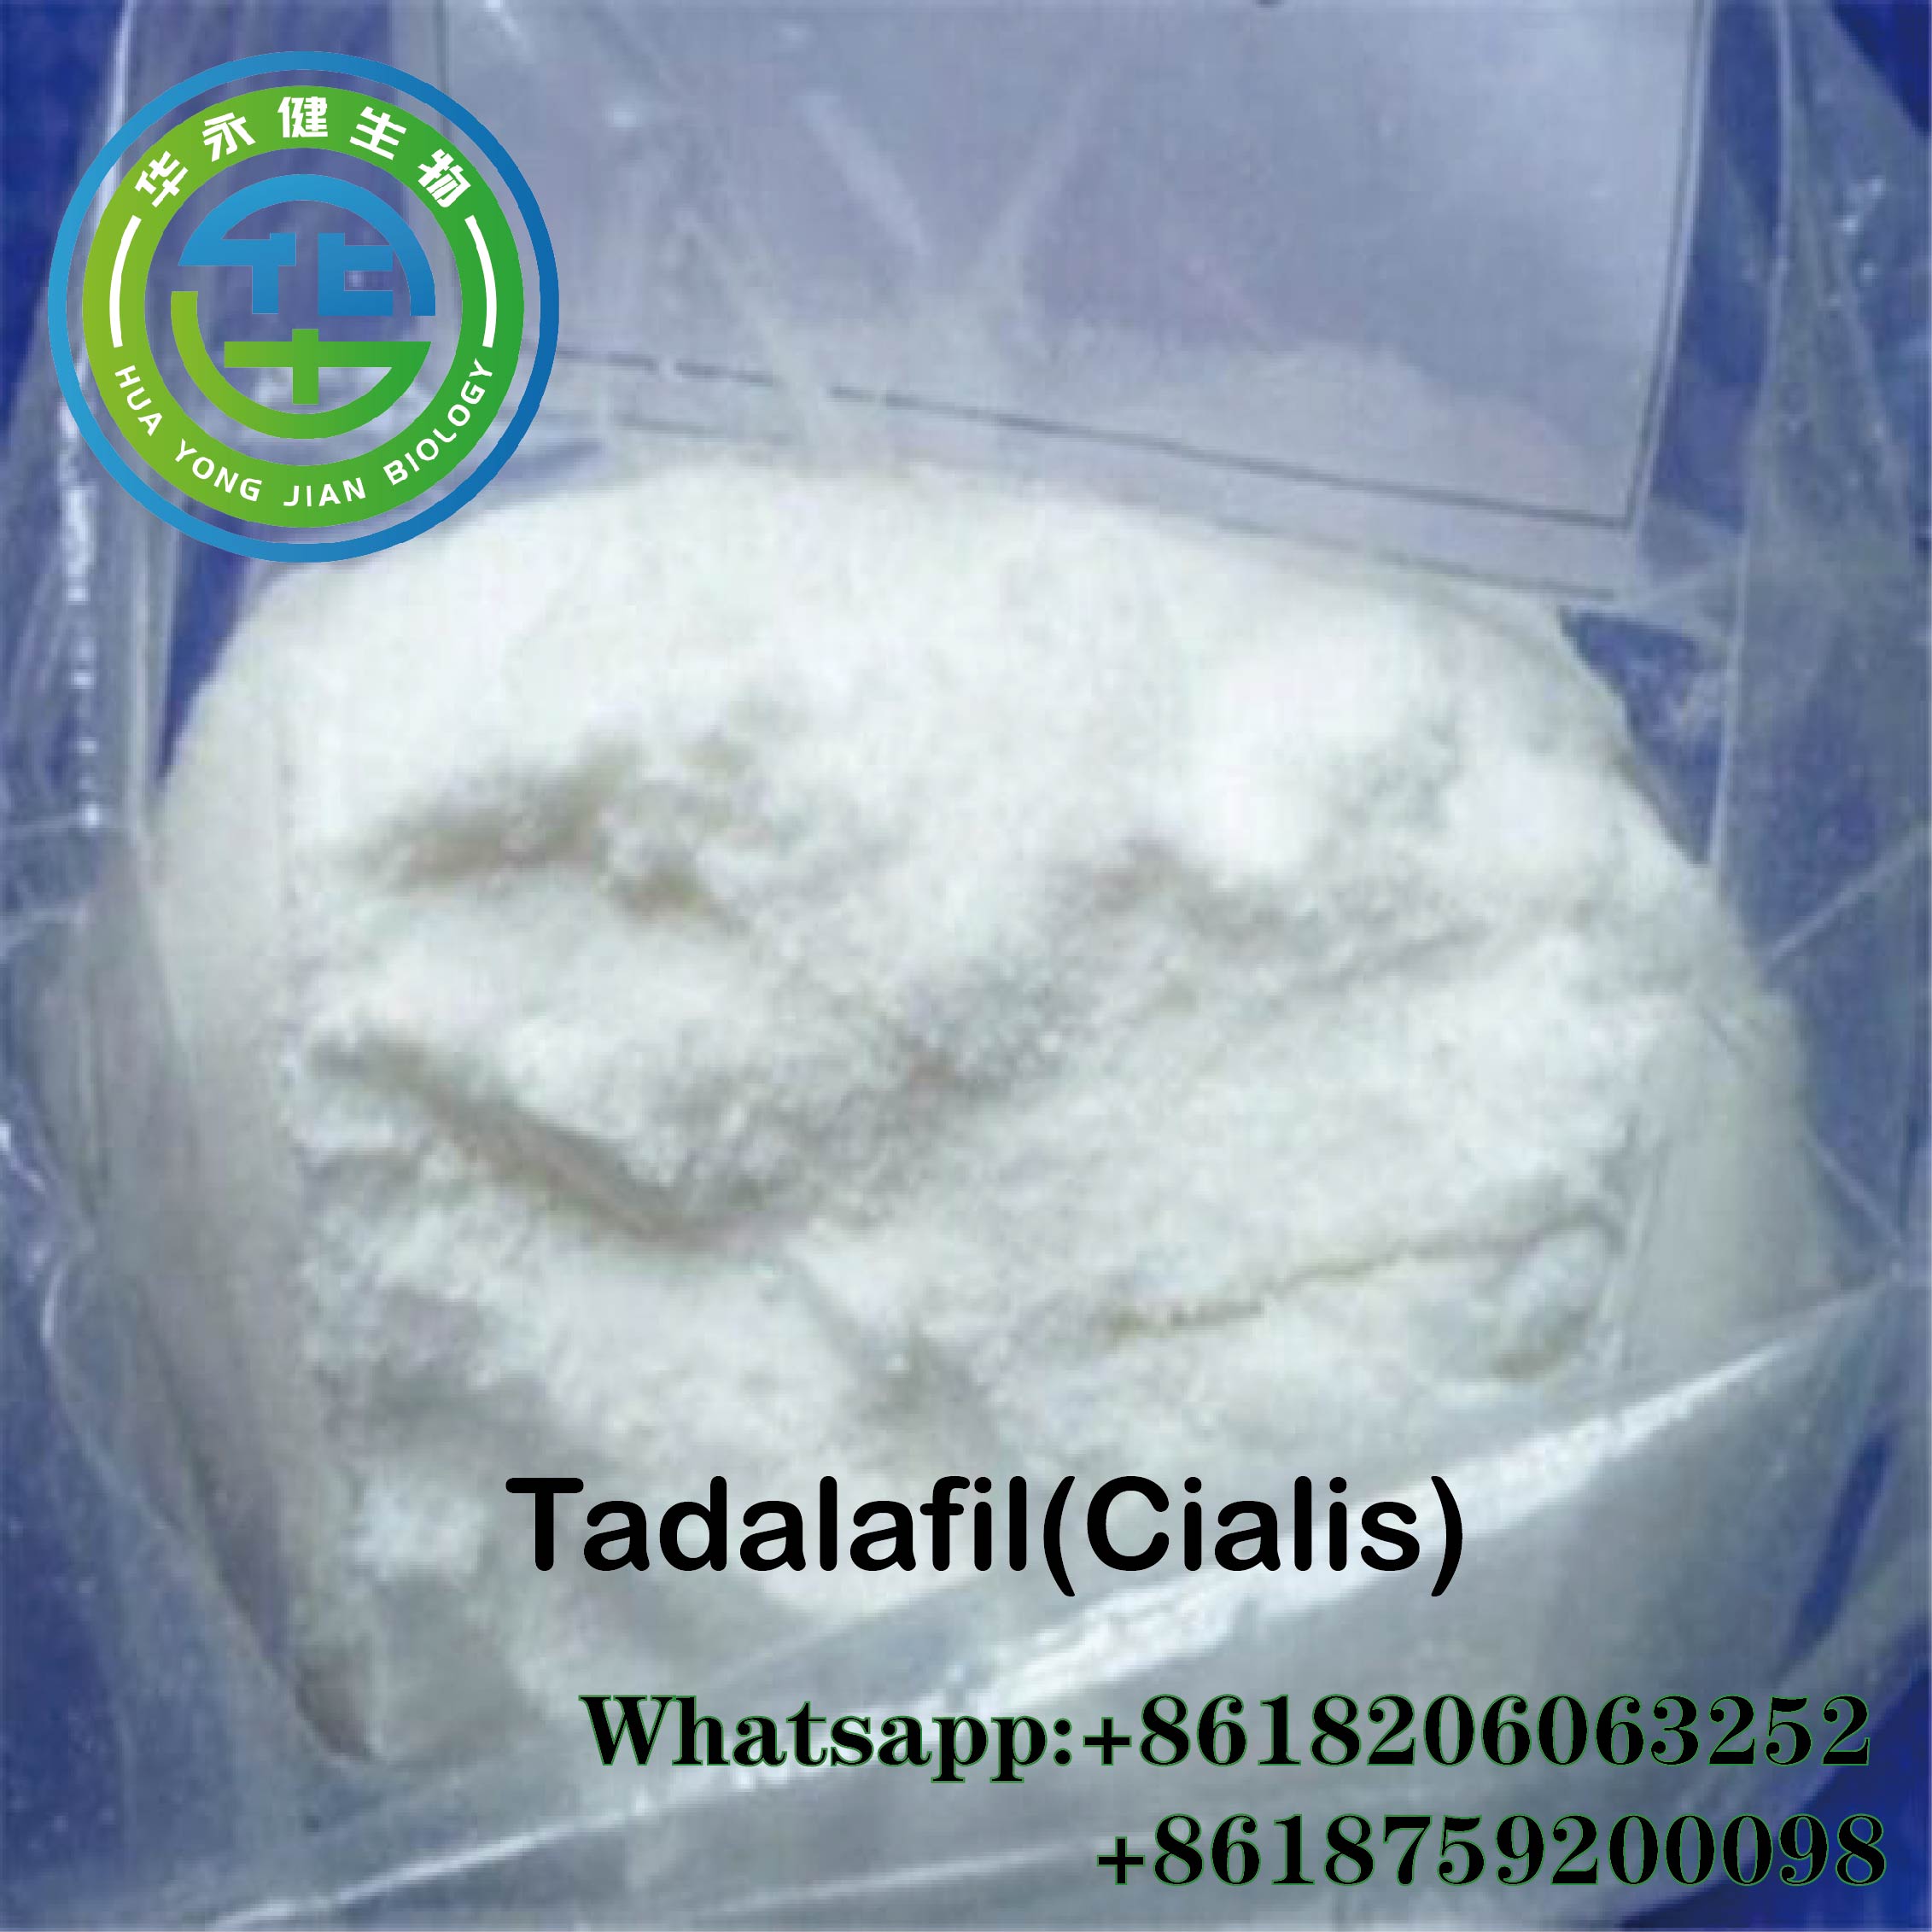 Pharmaceutical Grade Tadalafil (Cialis) Steroids Powder nga adunay 100% Delivery Gurantee CasNO.171596-29-5